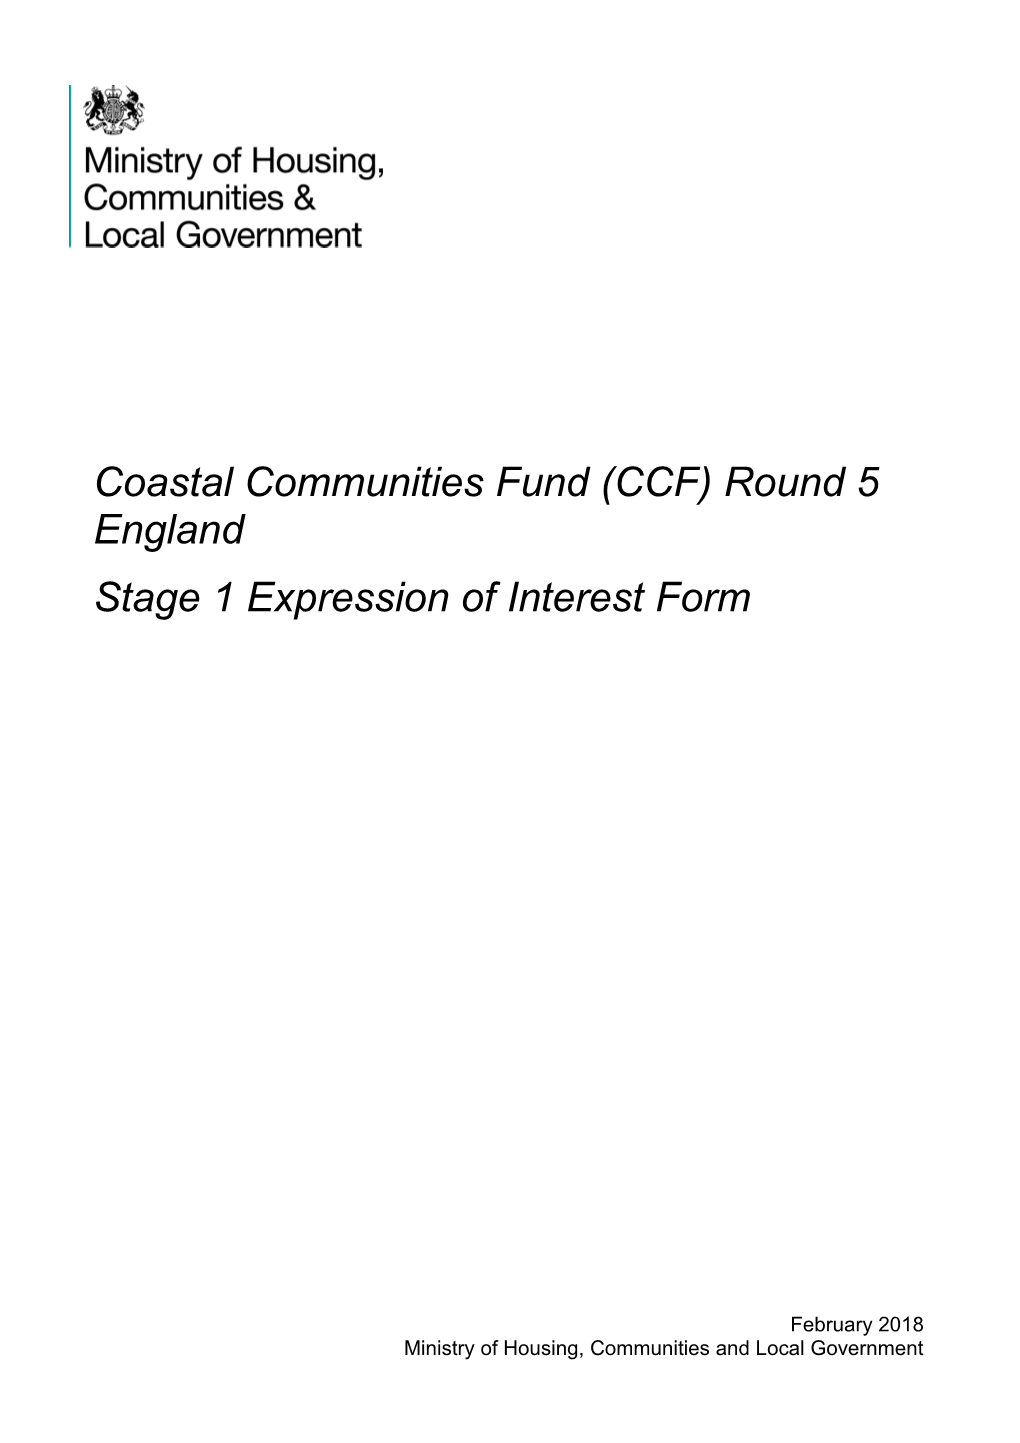 Coastal Communities Fund (CCF) Round 5 England